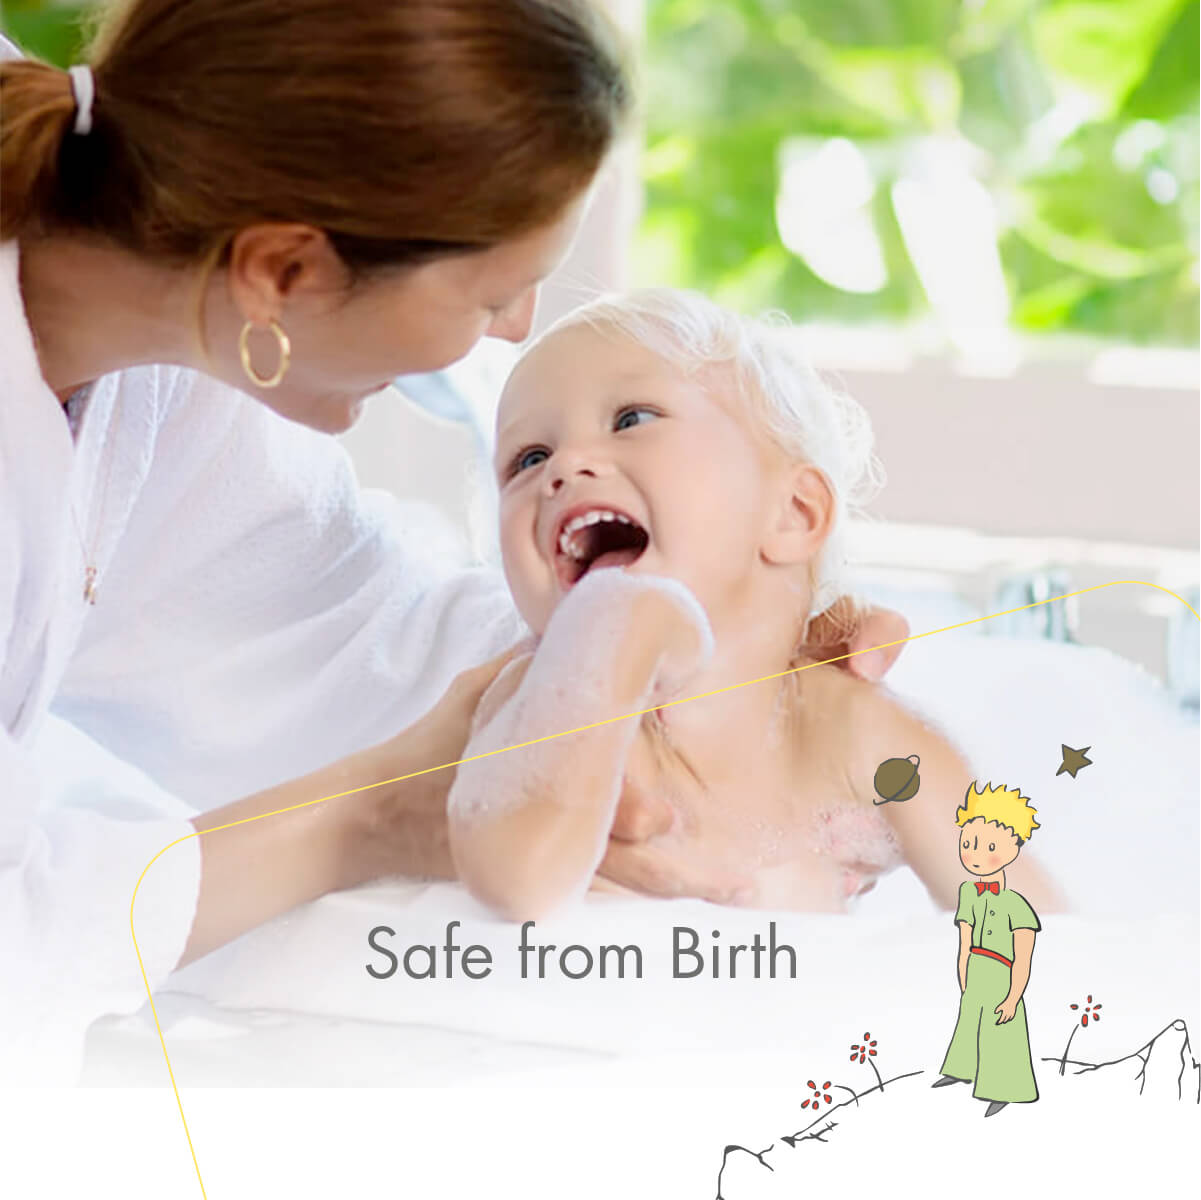 Le Petit Prince Gentle Baby Bath Shower Gel - 250 ml